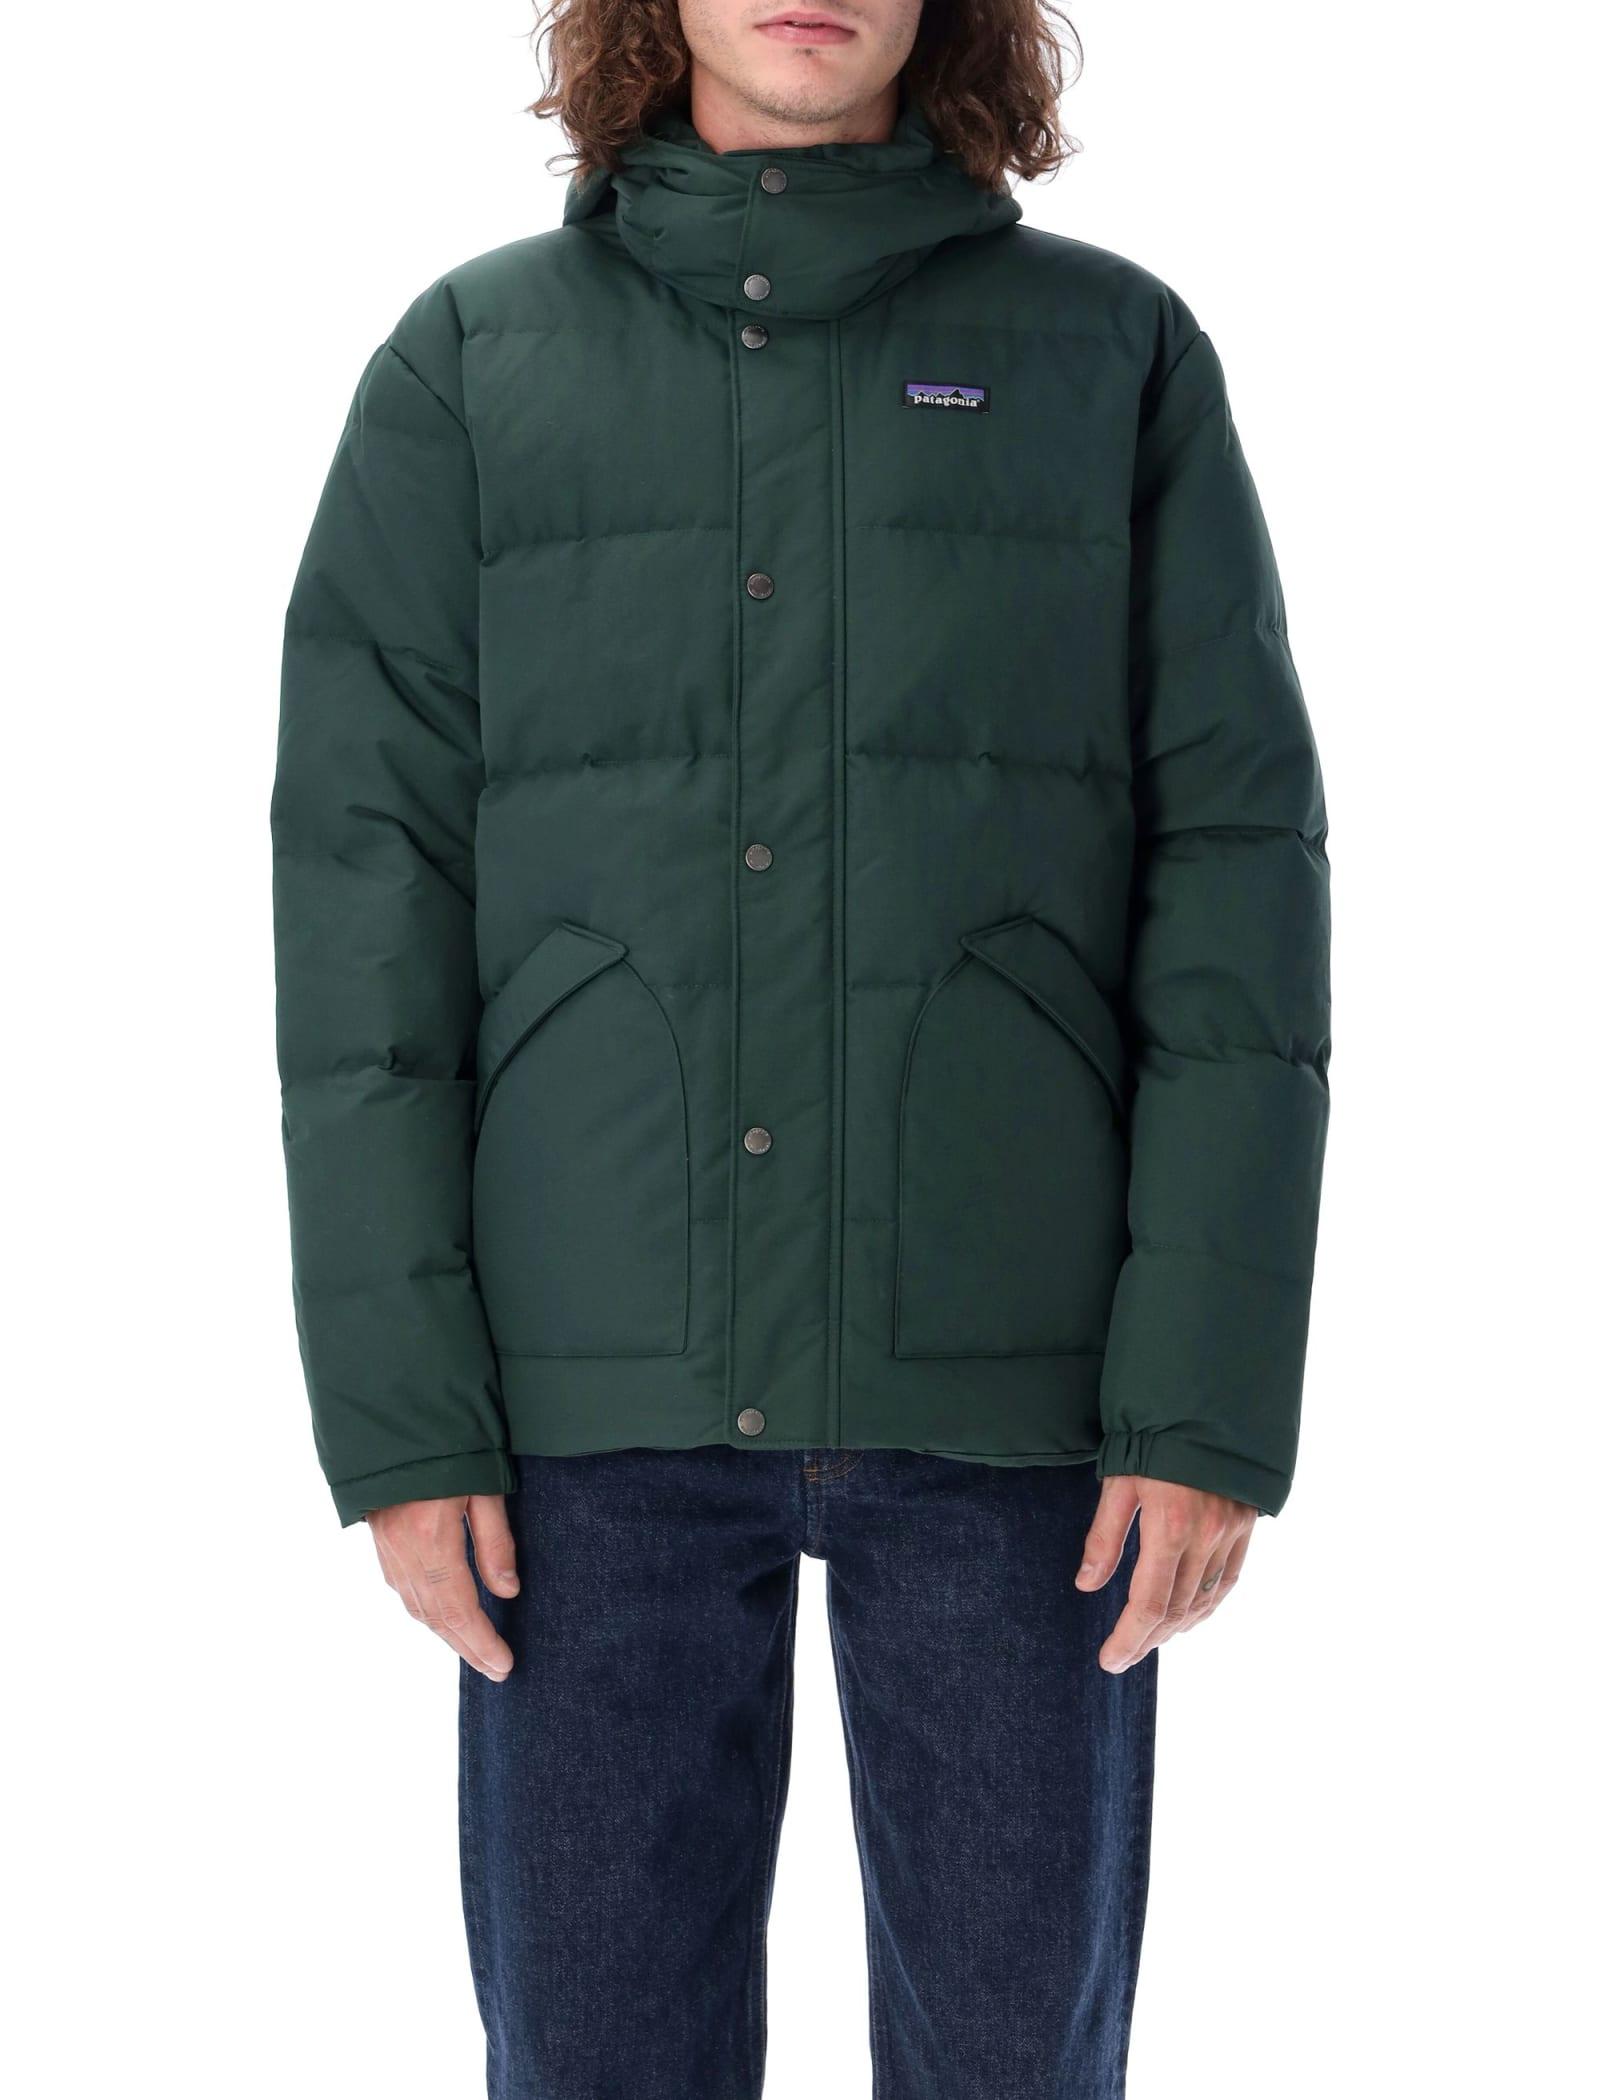 Patagonia Downdrift Jacket in Green for Men